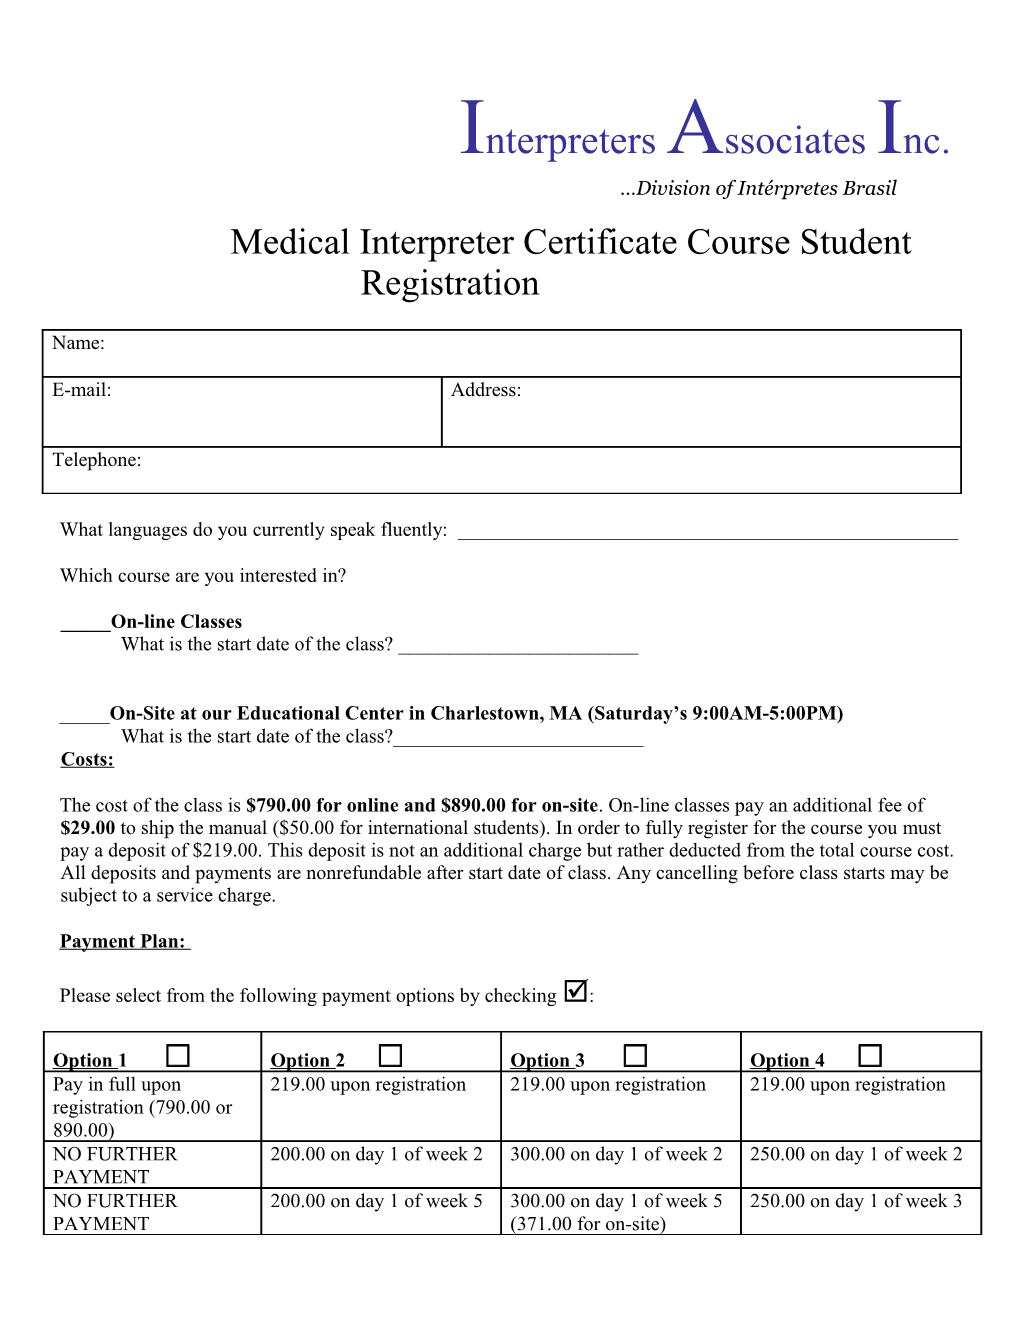 Medical Interpreter Certificate Course Student Registration